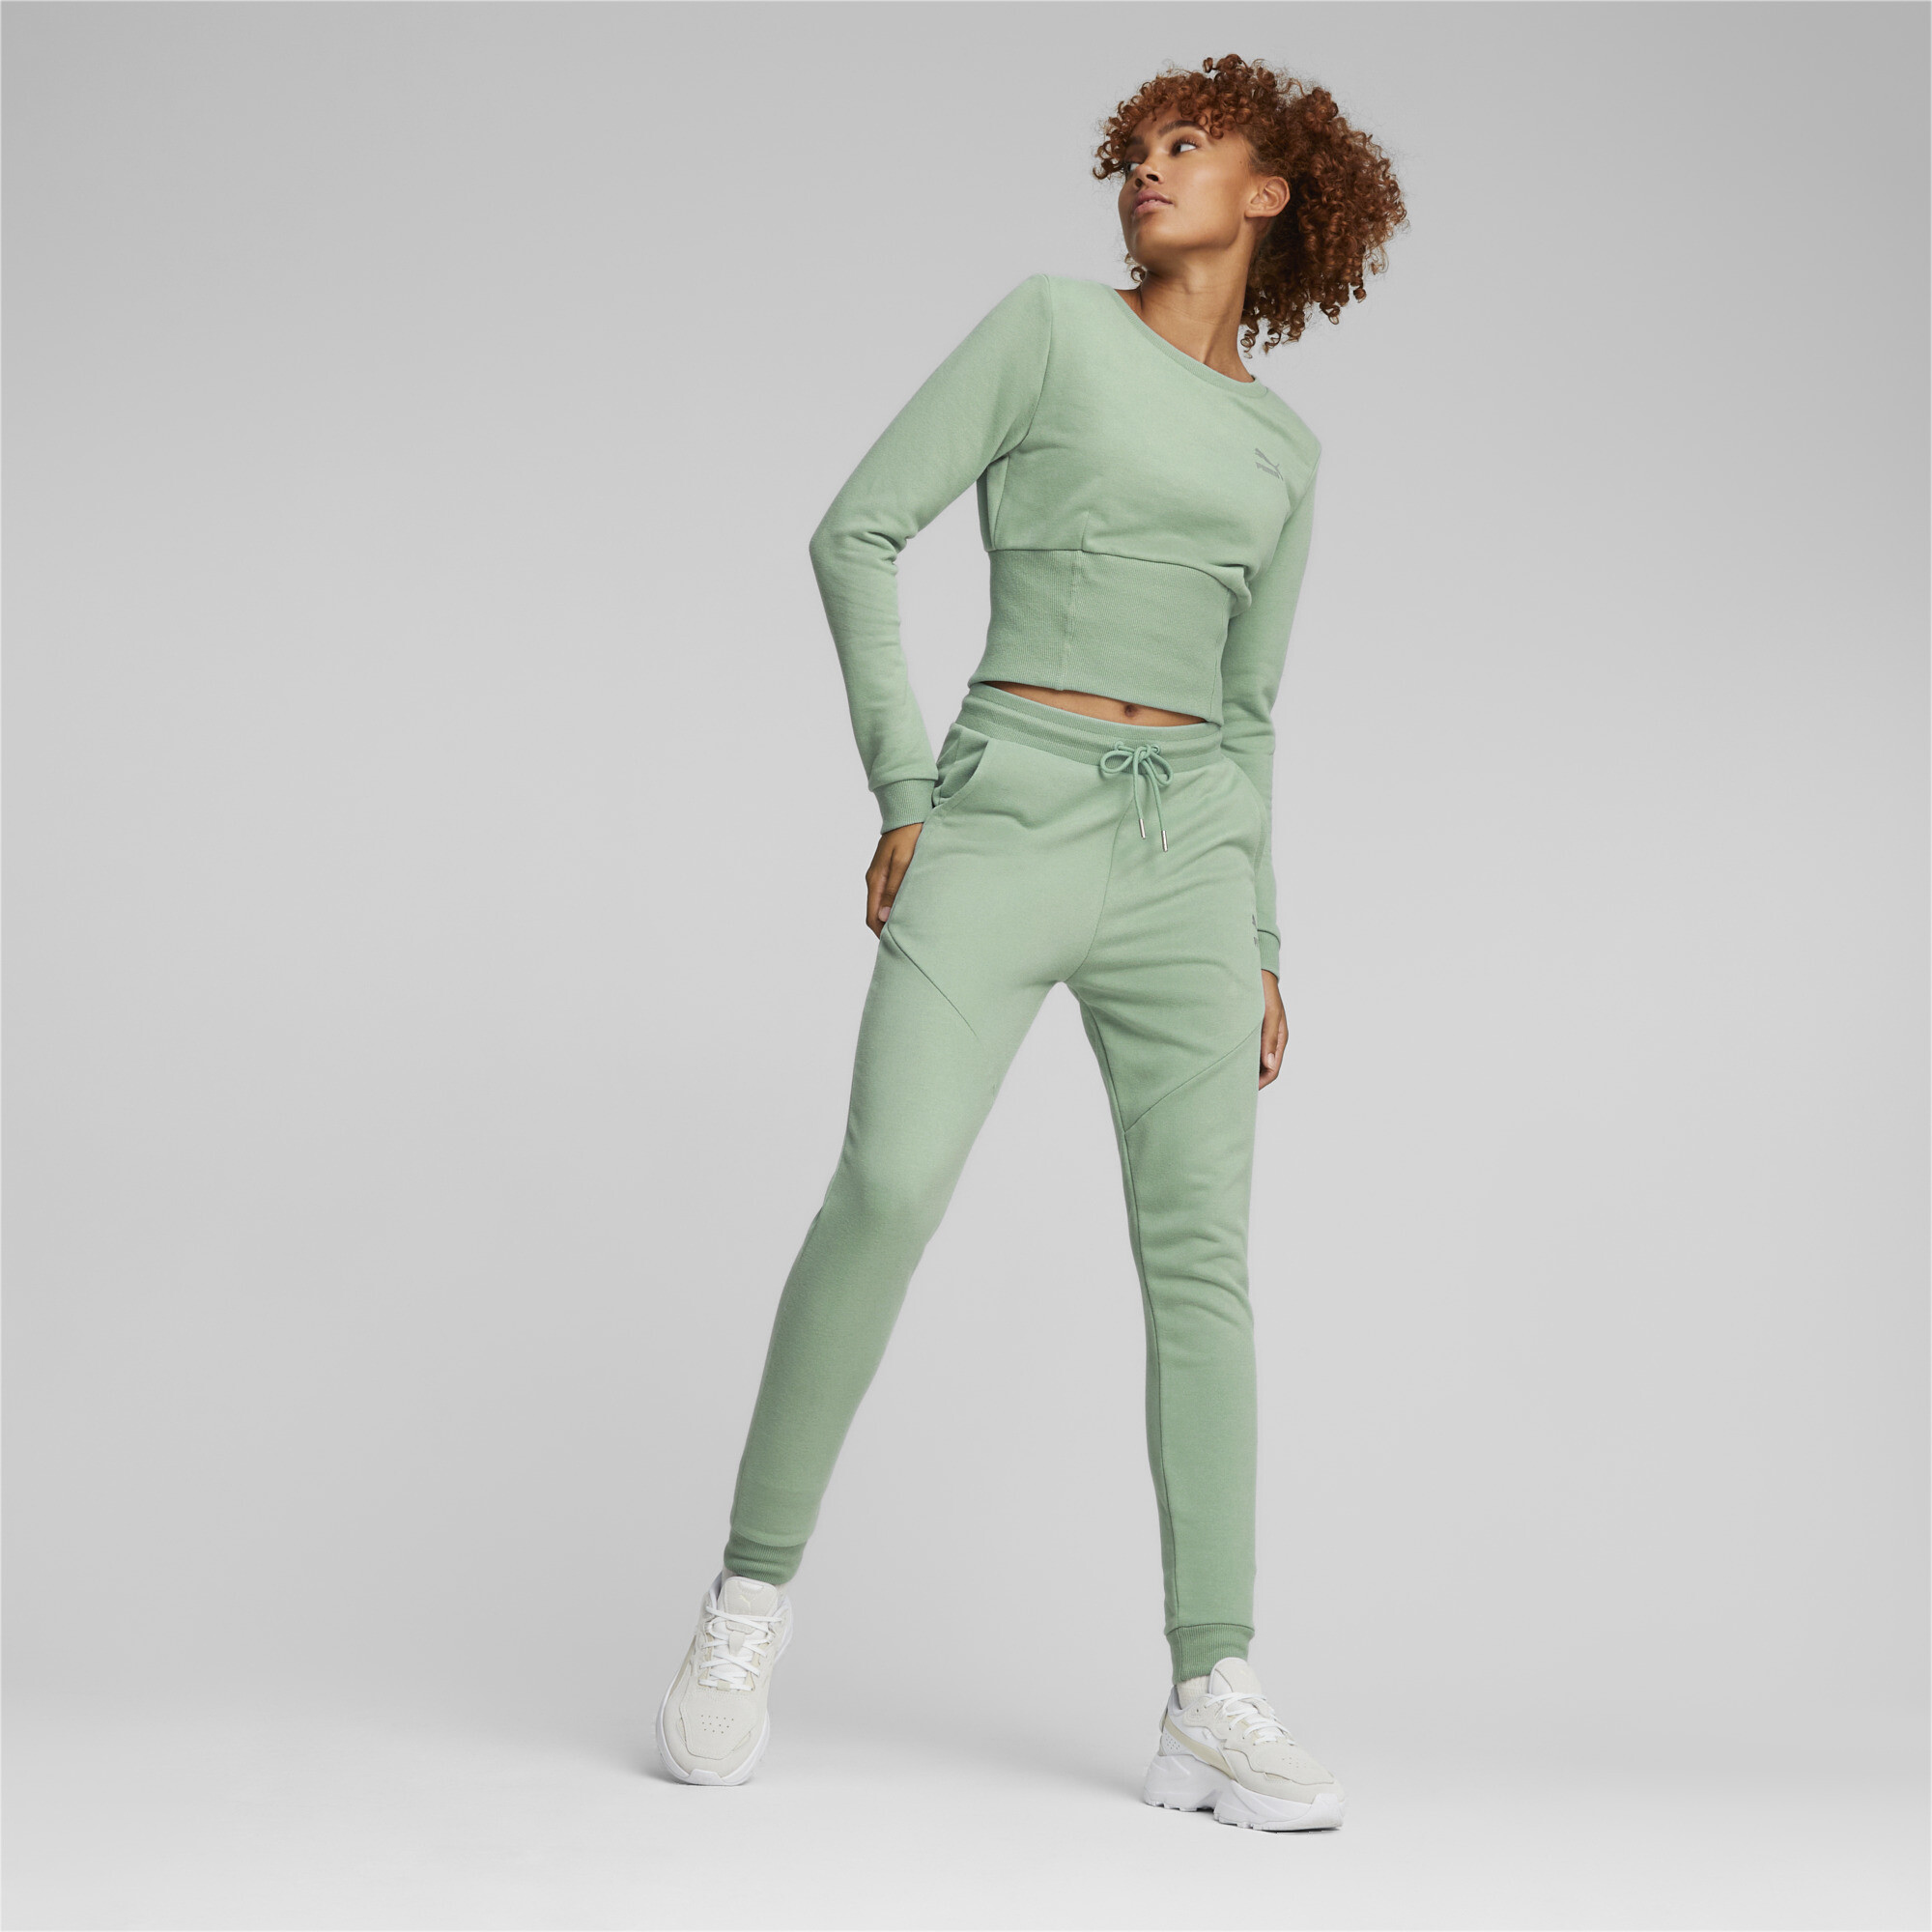 Women's Puma X PAMELA REIF Classics Crewneck Sweatshirt, Green, Size XS, Clothing